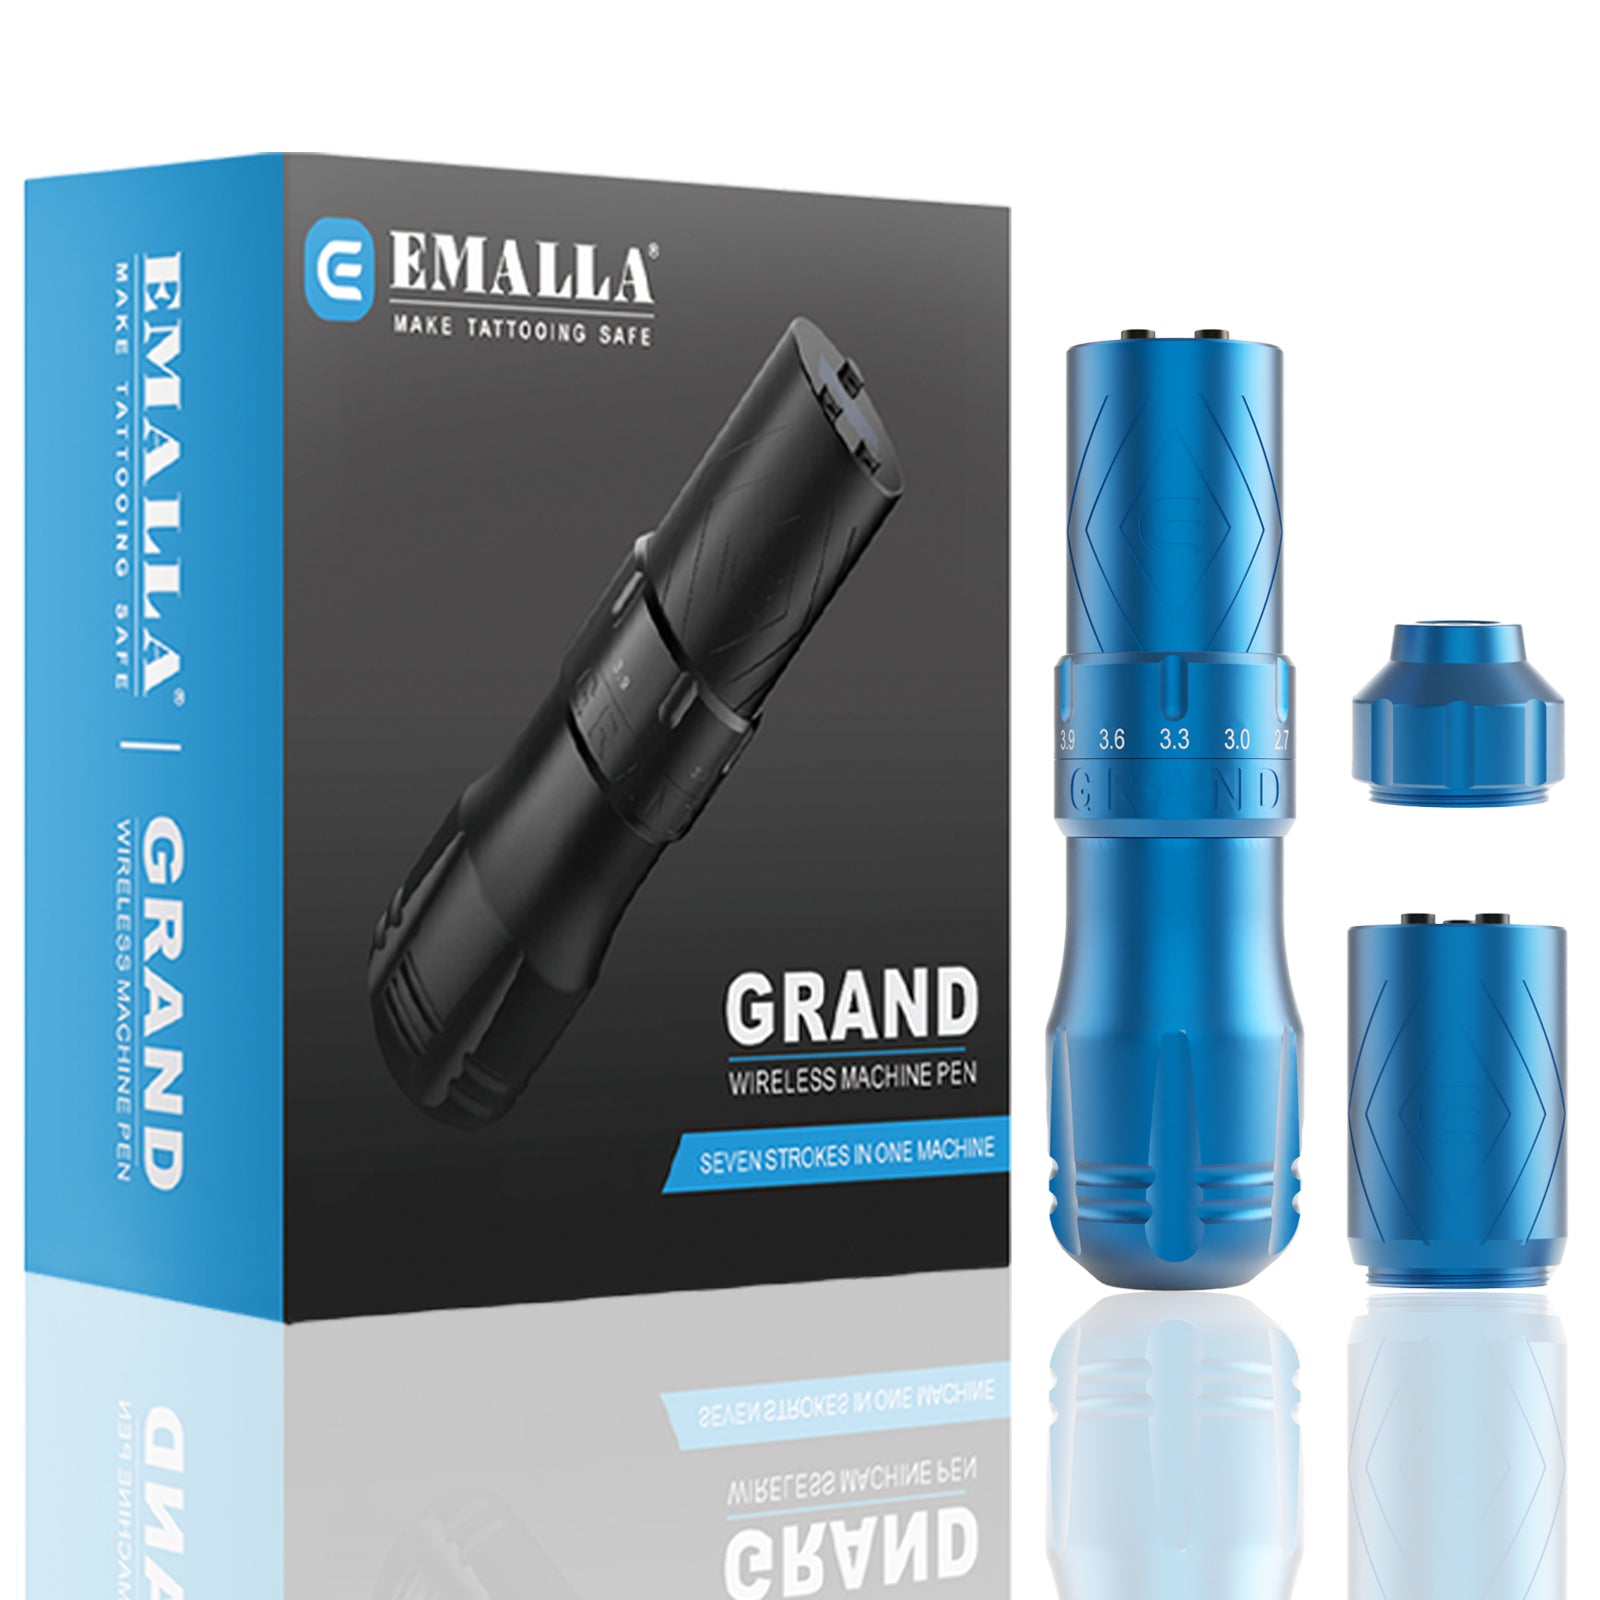 EMALLA GRAND Wireless Pen Machine 2 Battery Pack (BLUE)